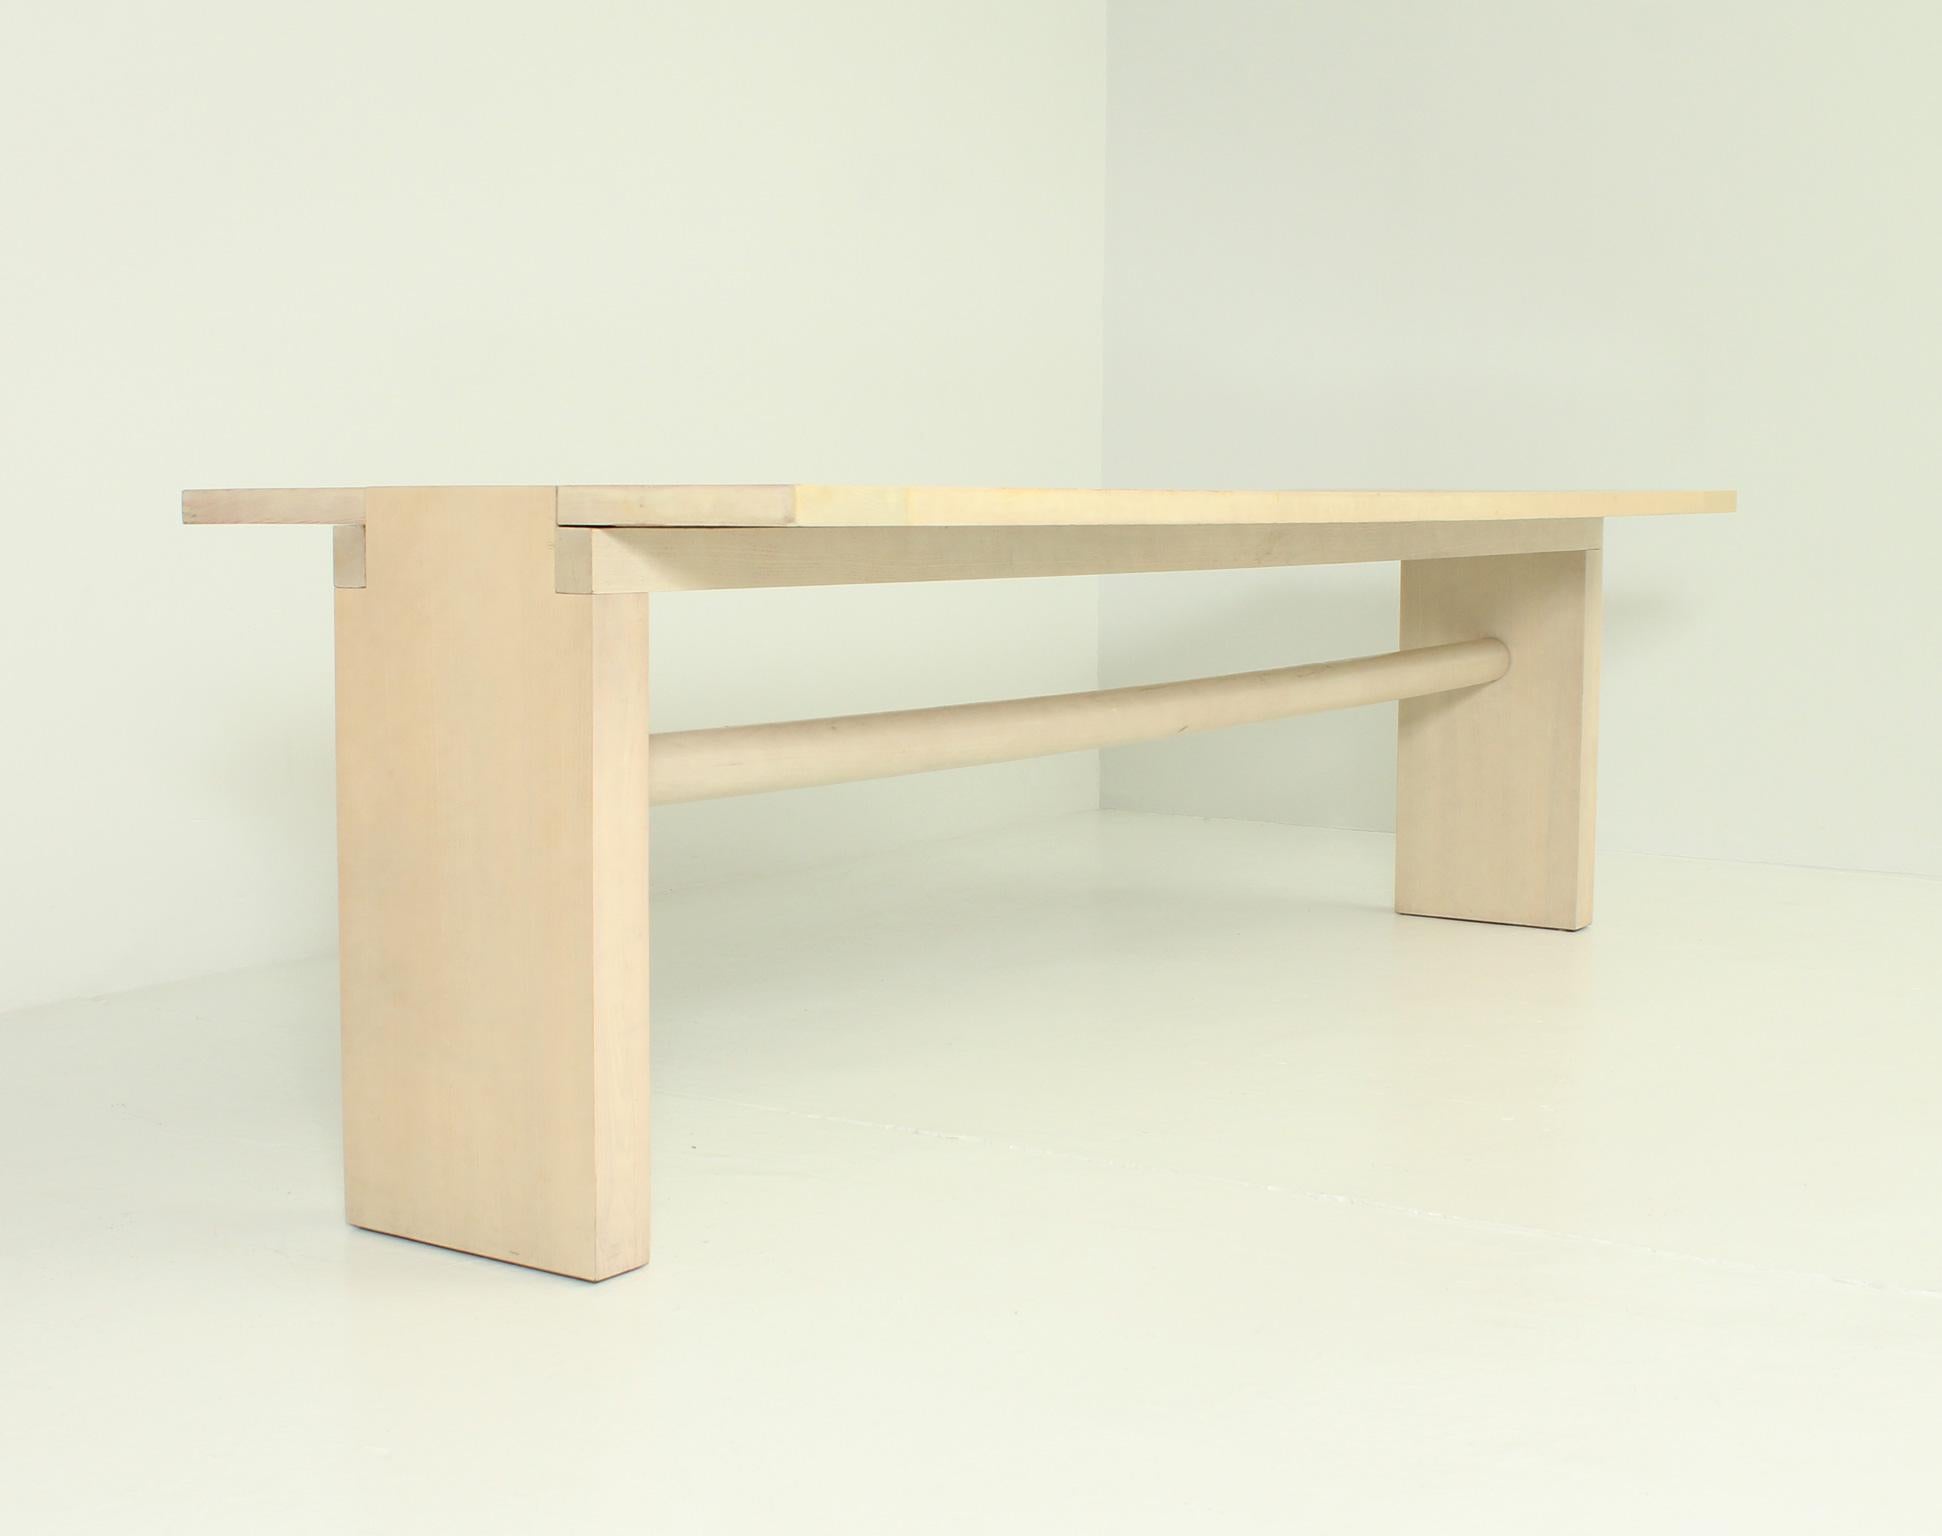 Valmanara table designed in 1971 by italian architect Carlo Scarpa for Simon International-Gavina. Oak wood with cerused varnish finish. 